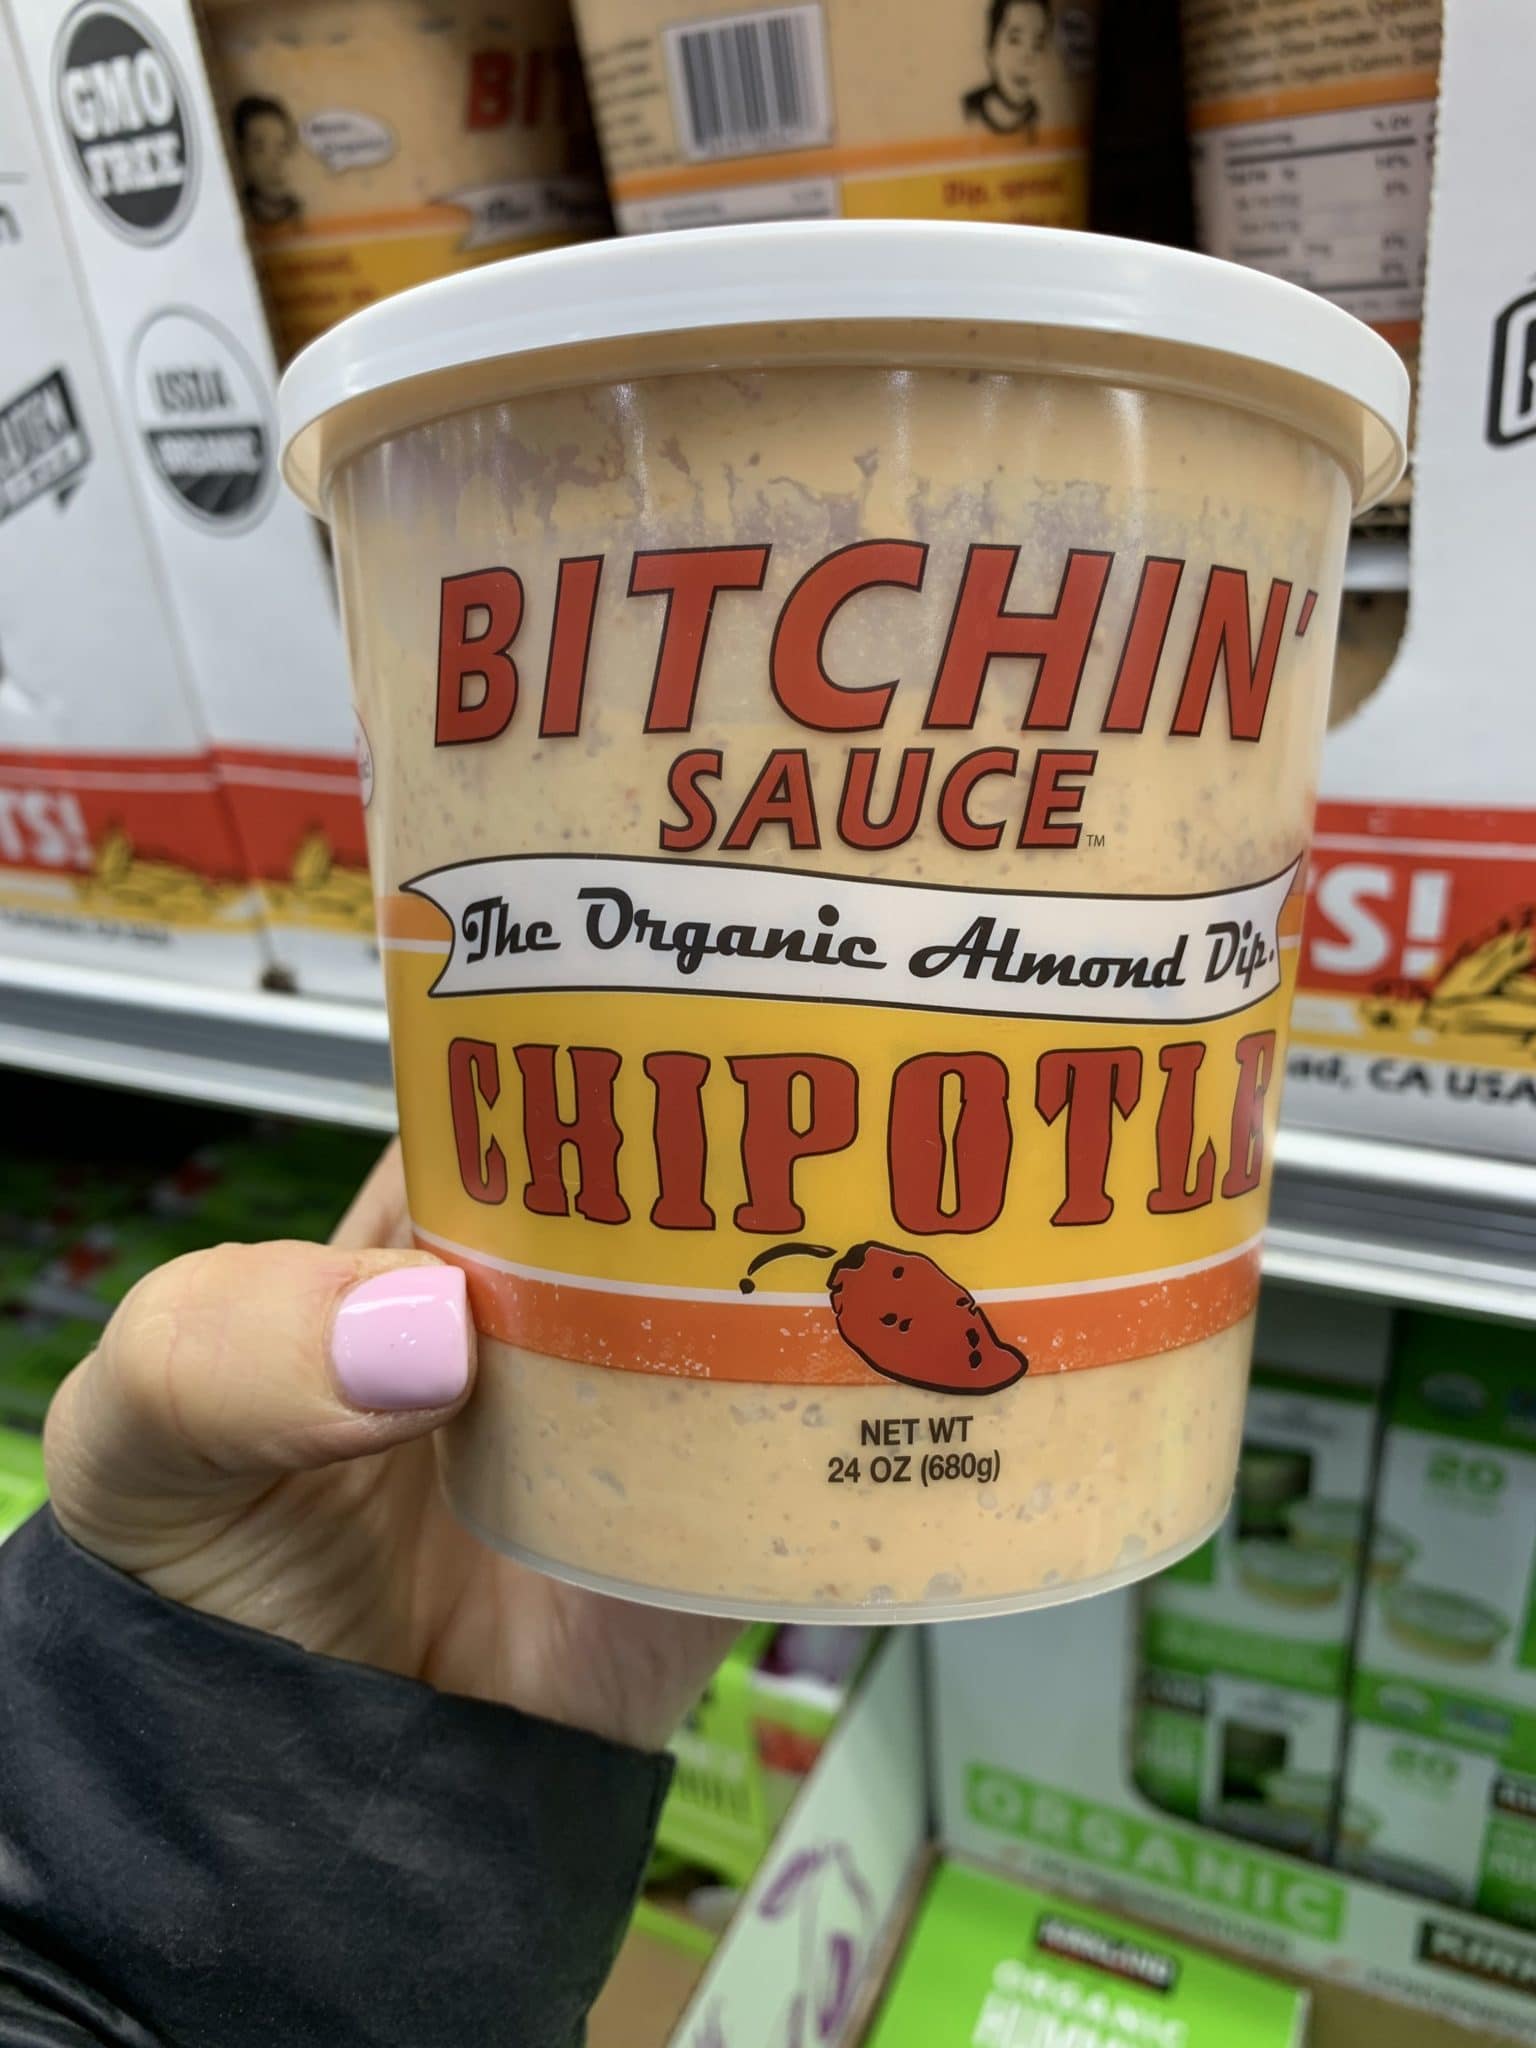 Bitchin' sauce from Costco